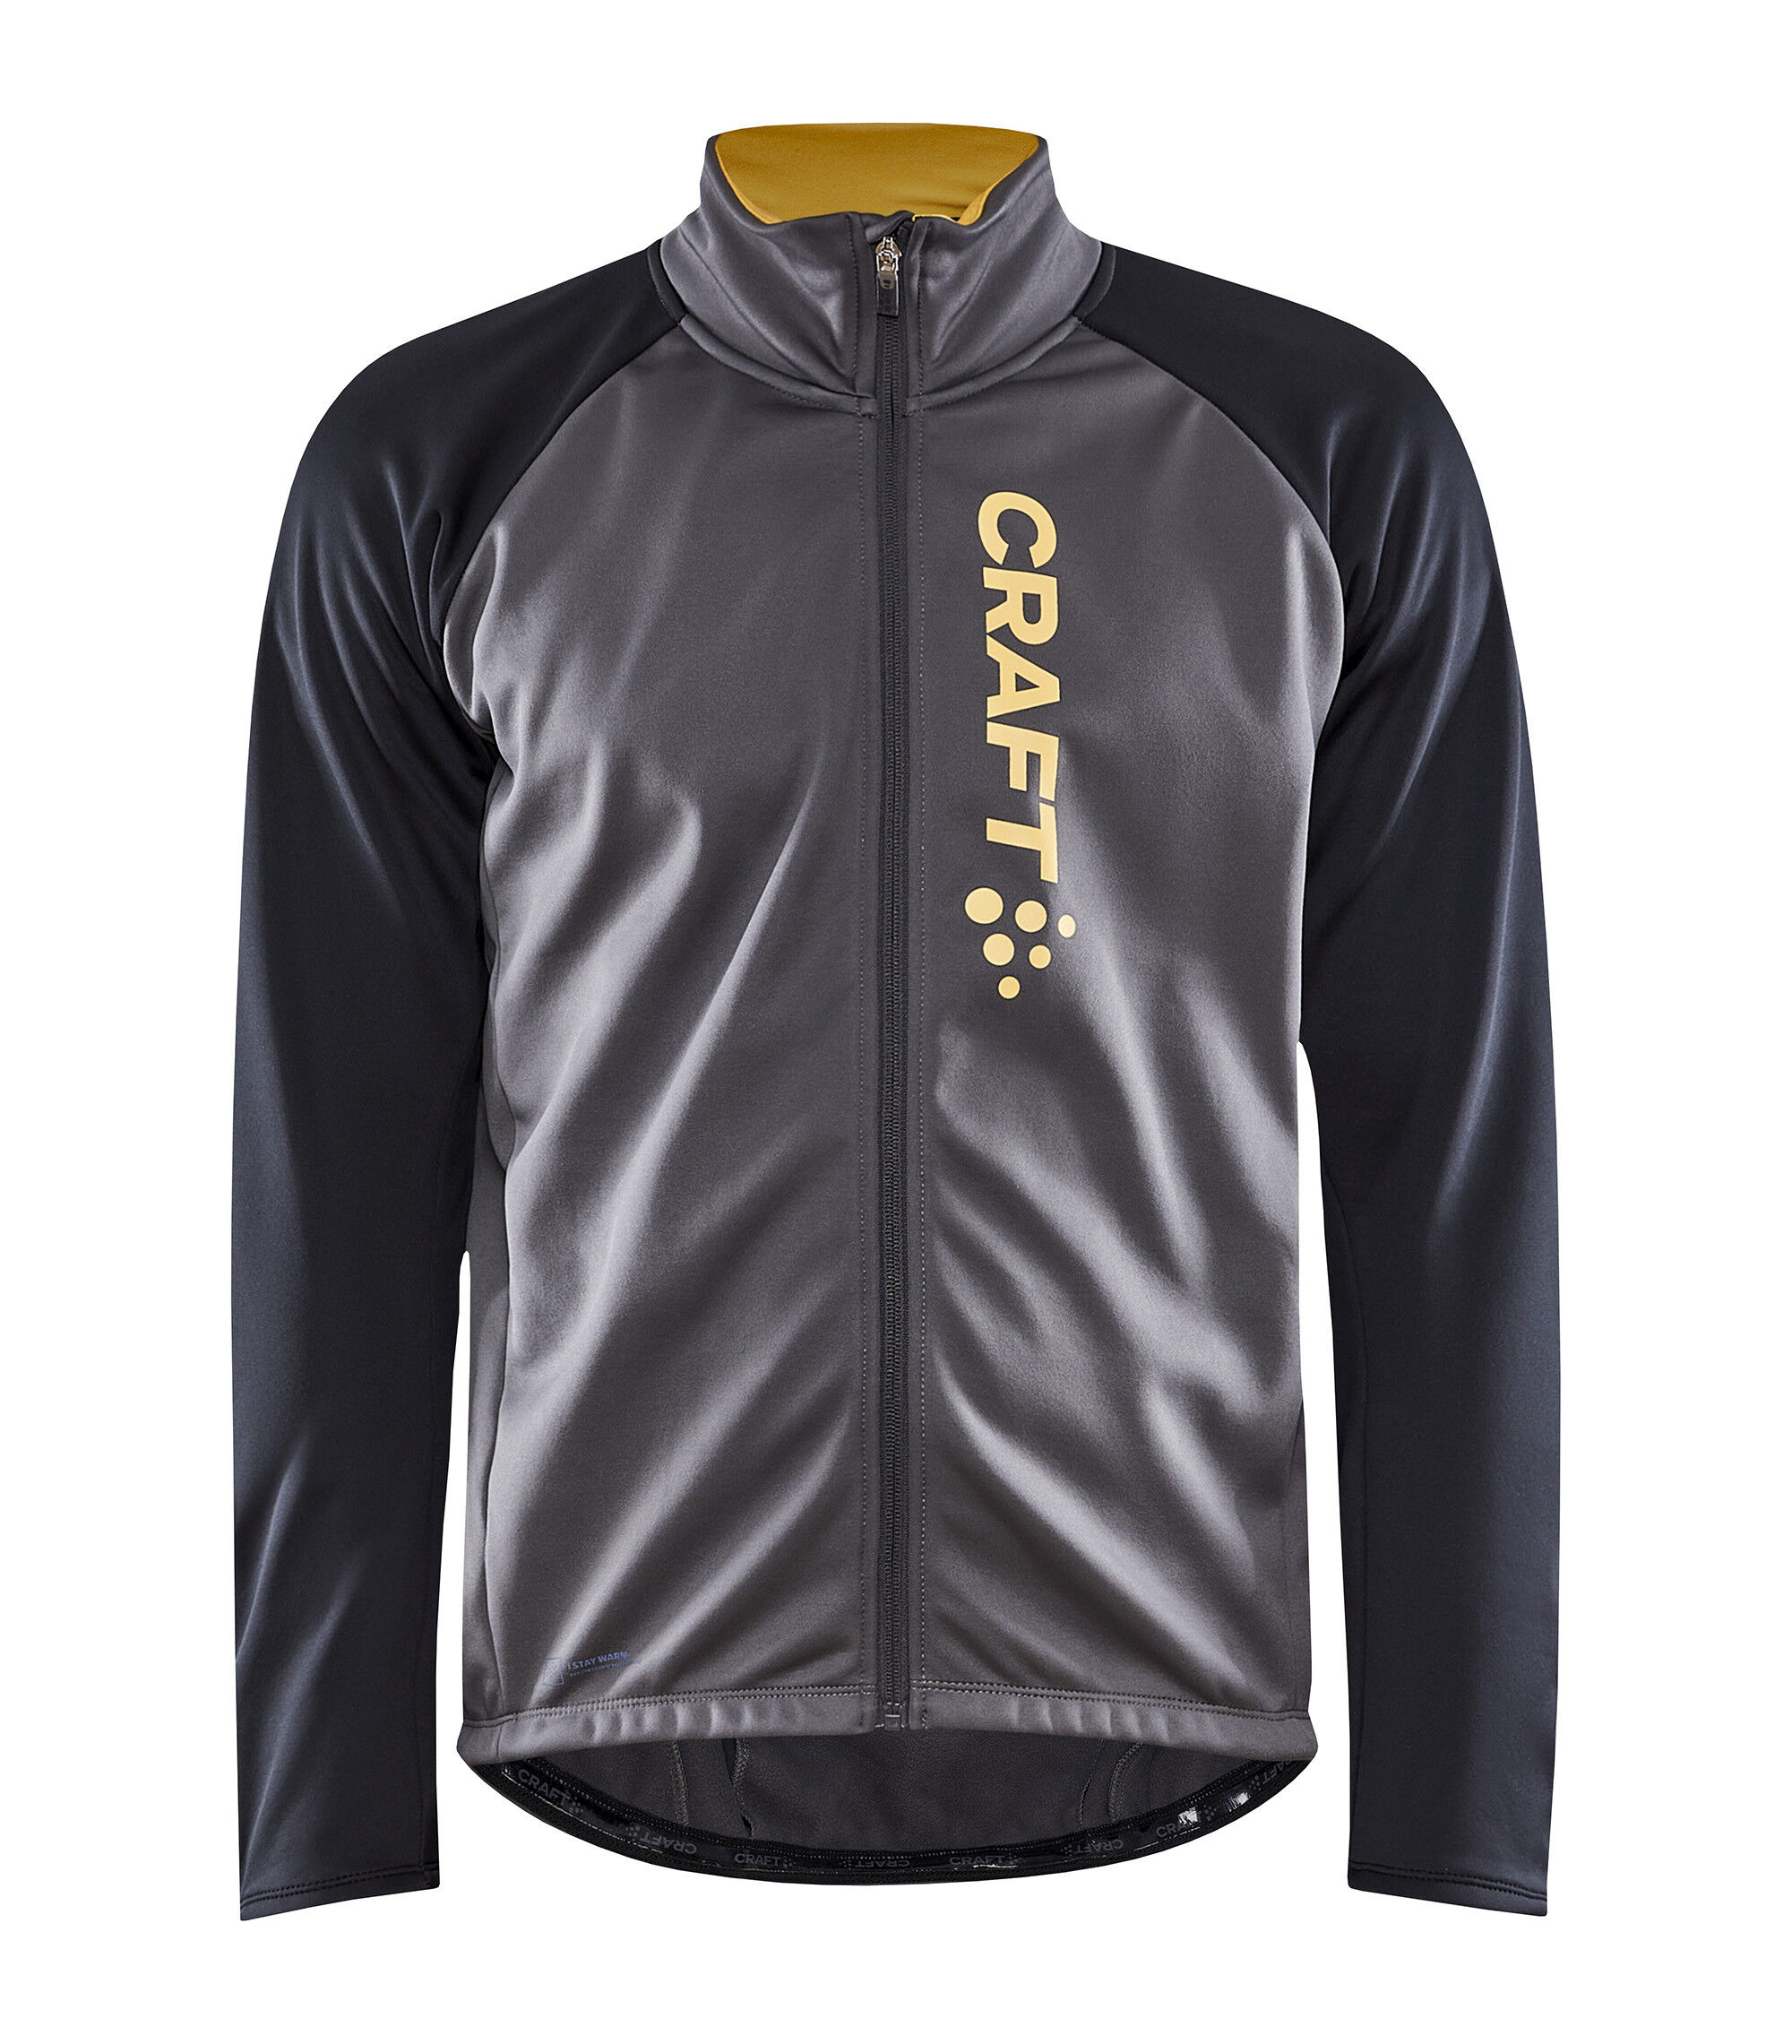 Craft Core Bike Subz Jacket - Giacca ciclismo - Uomo